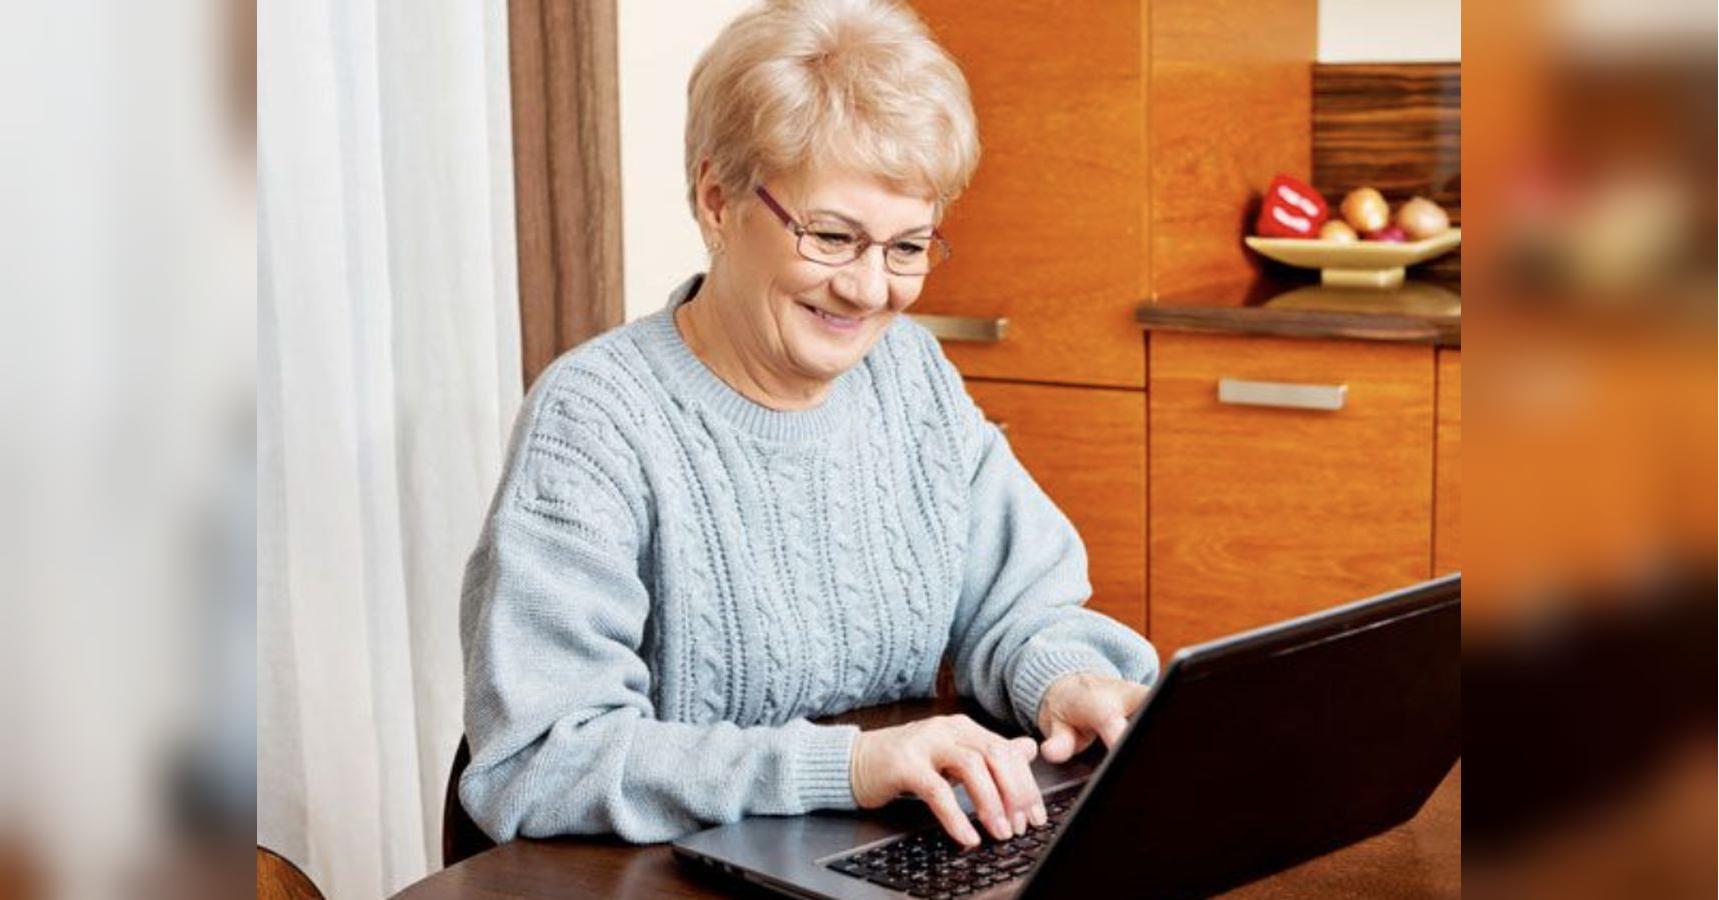 Авито для пенсионеров. Пенсионер за компьютером. Пенсионеры и компьютер. Пожилые за компом. Бабушка и компьютер.